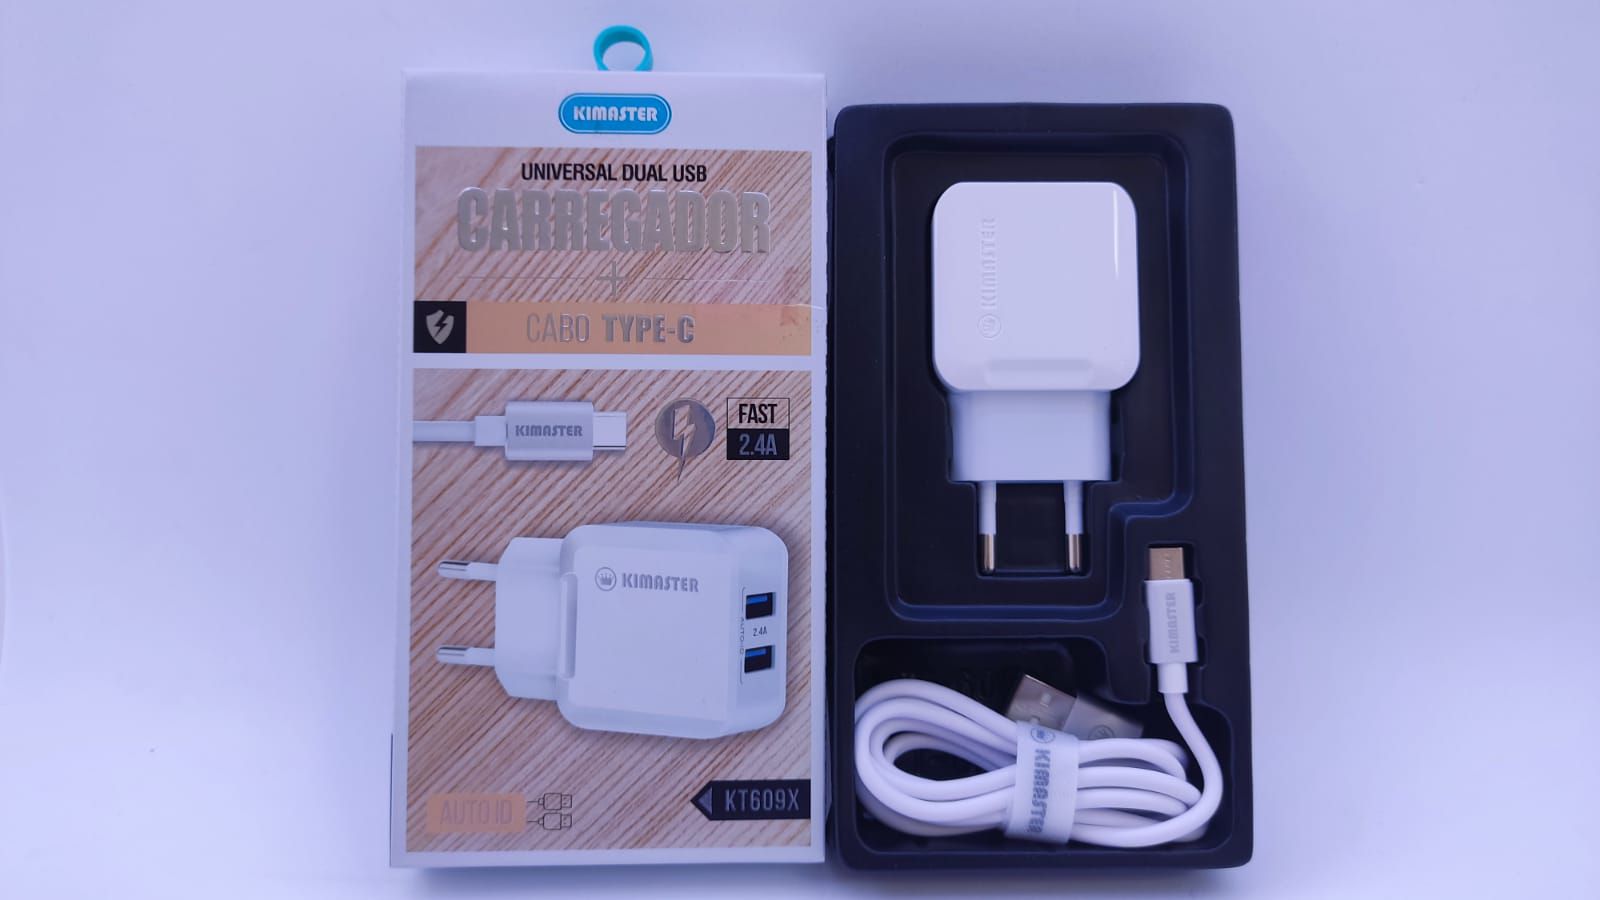 Kit Carregador USB com Cabo Micro USB Kimaster